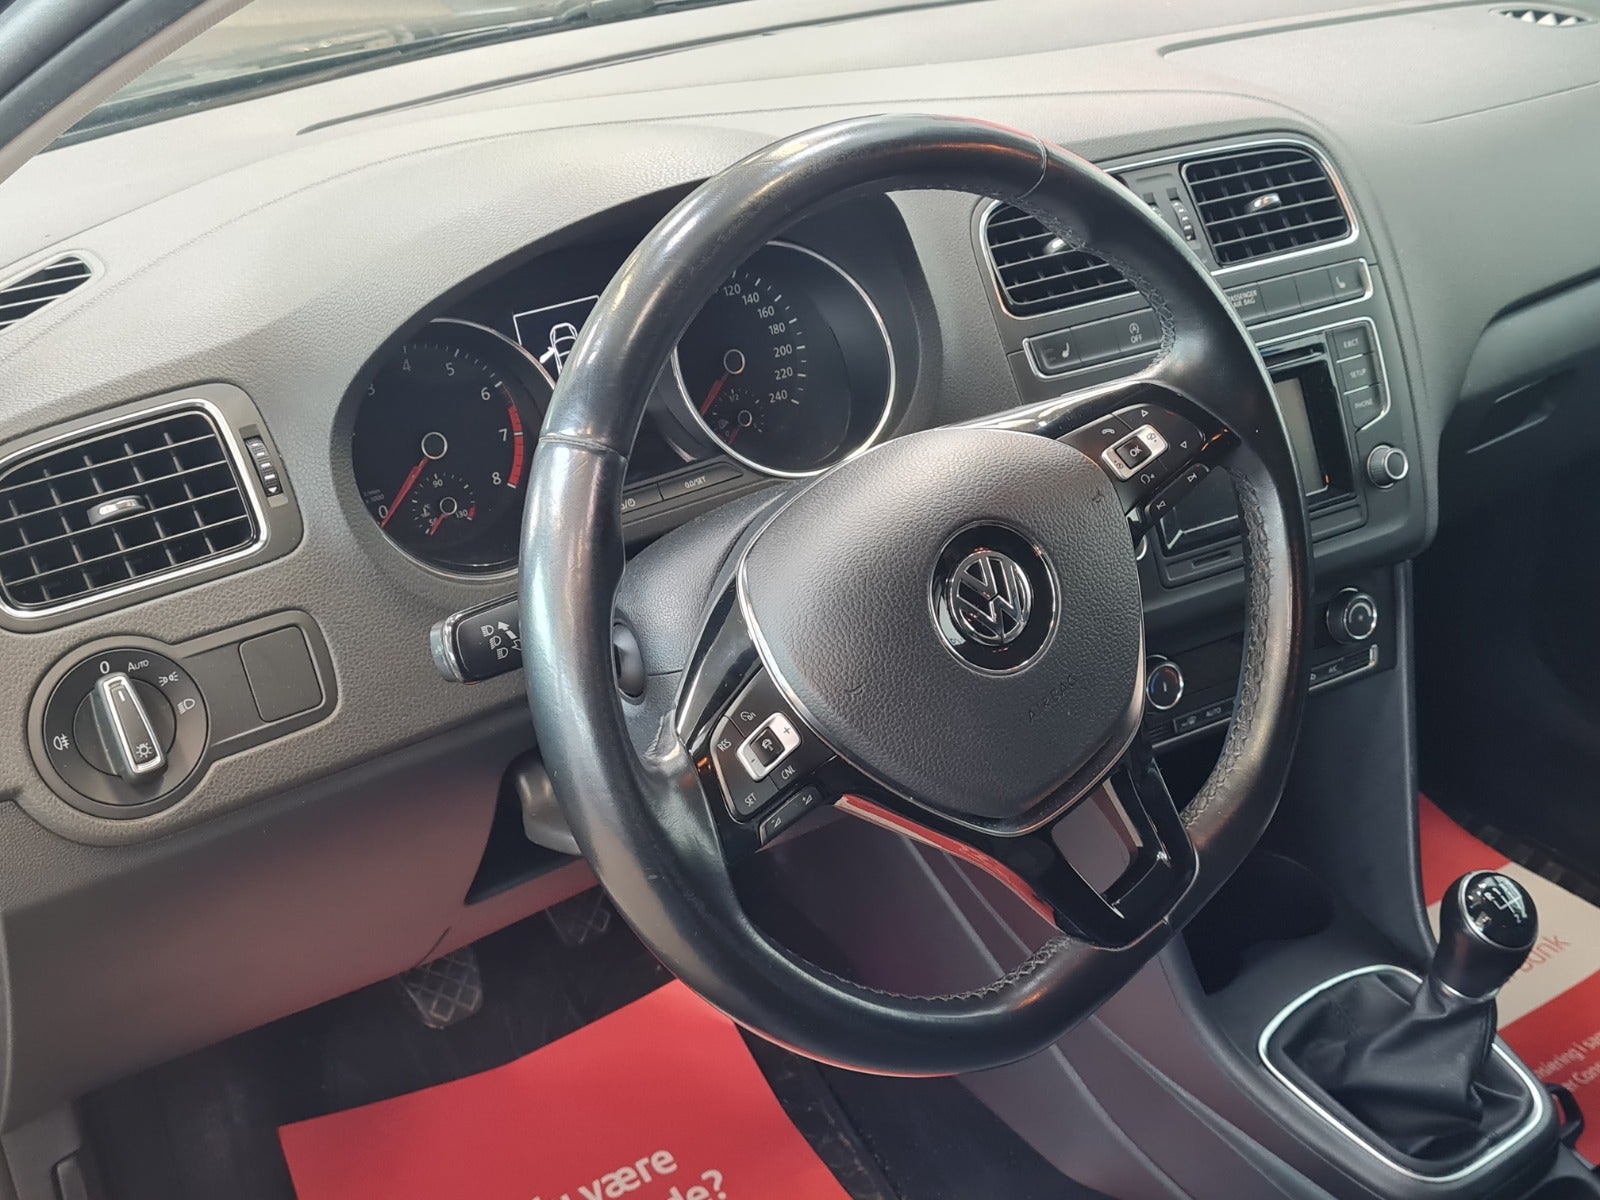 VW Polo 2016